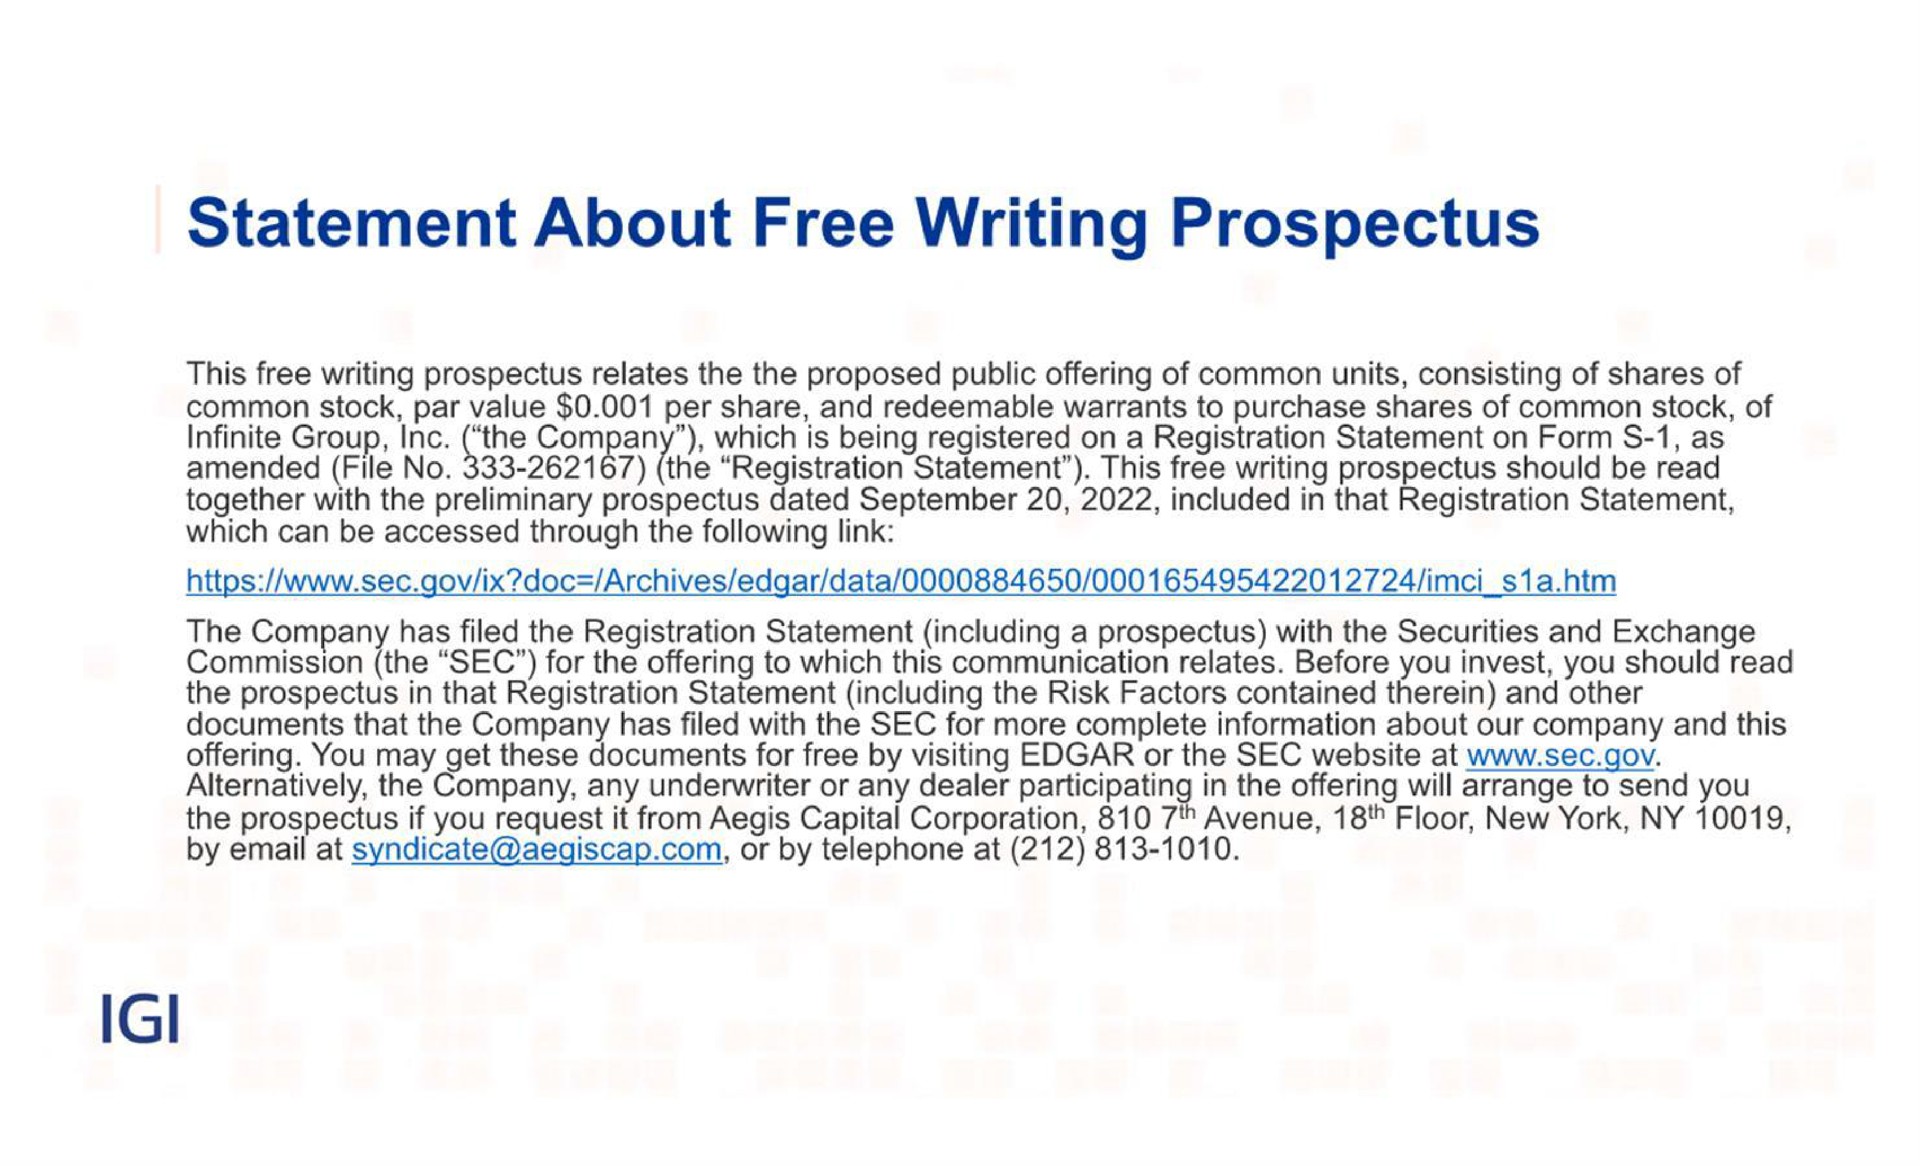 statement about free writing prospectus | IGI